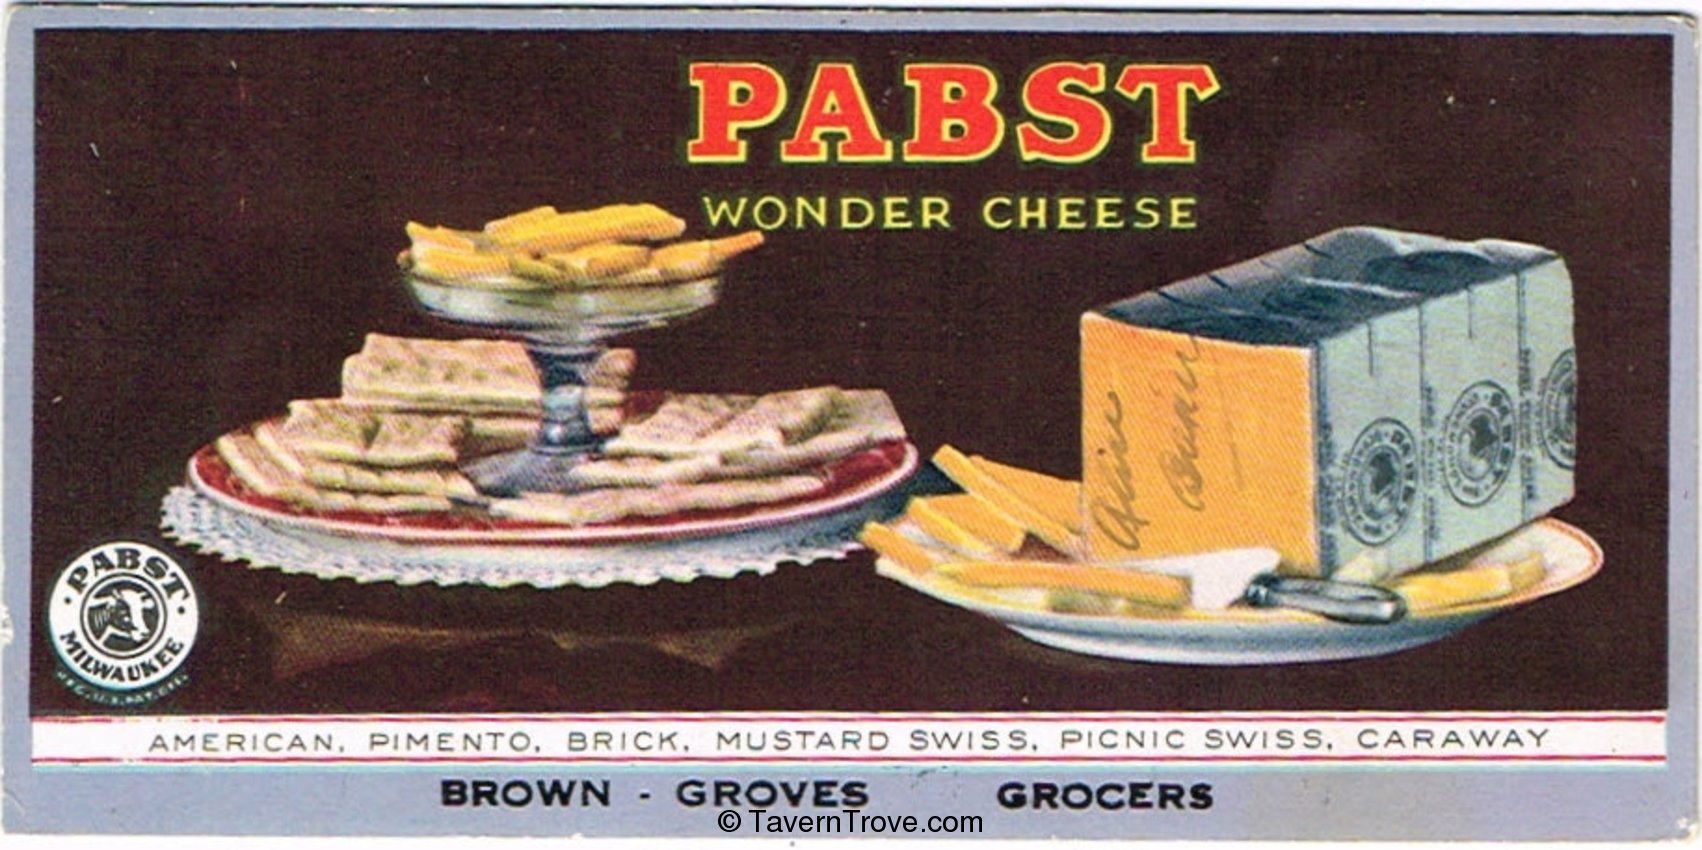 Pabst Wonder Cheese